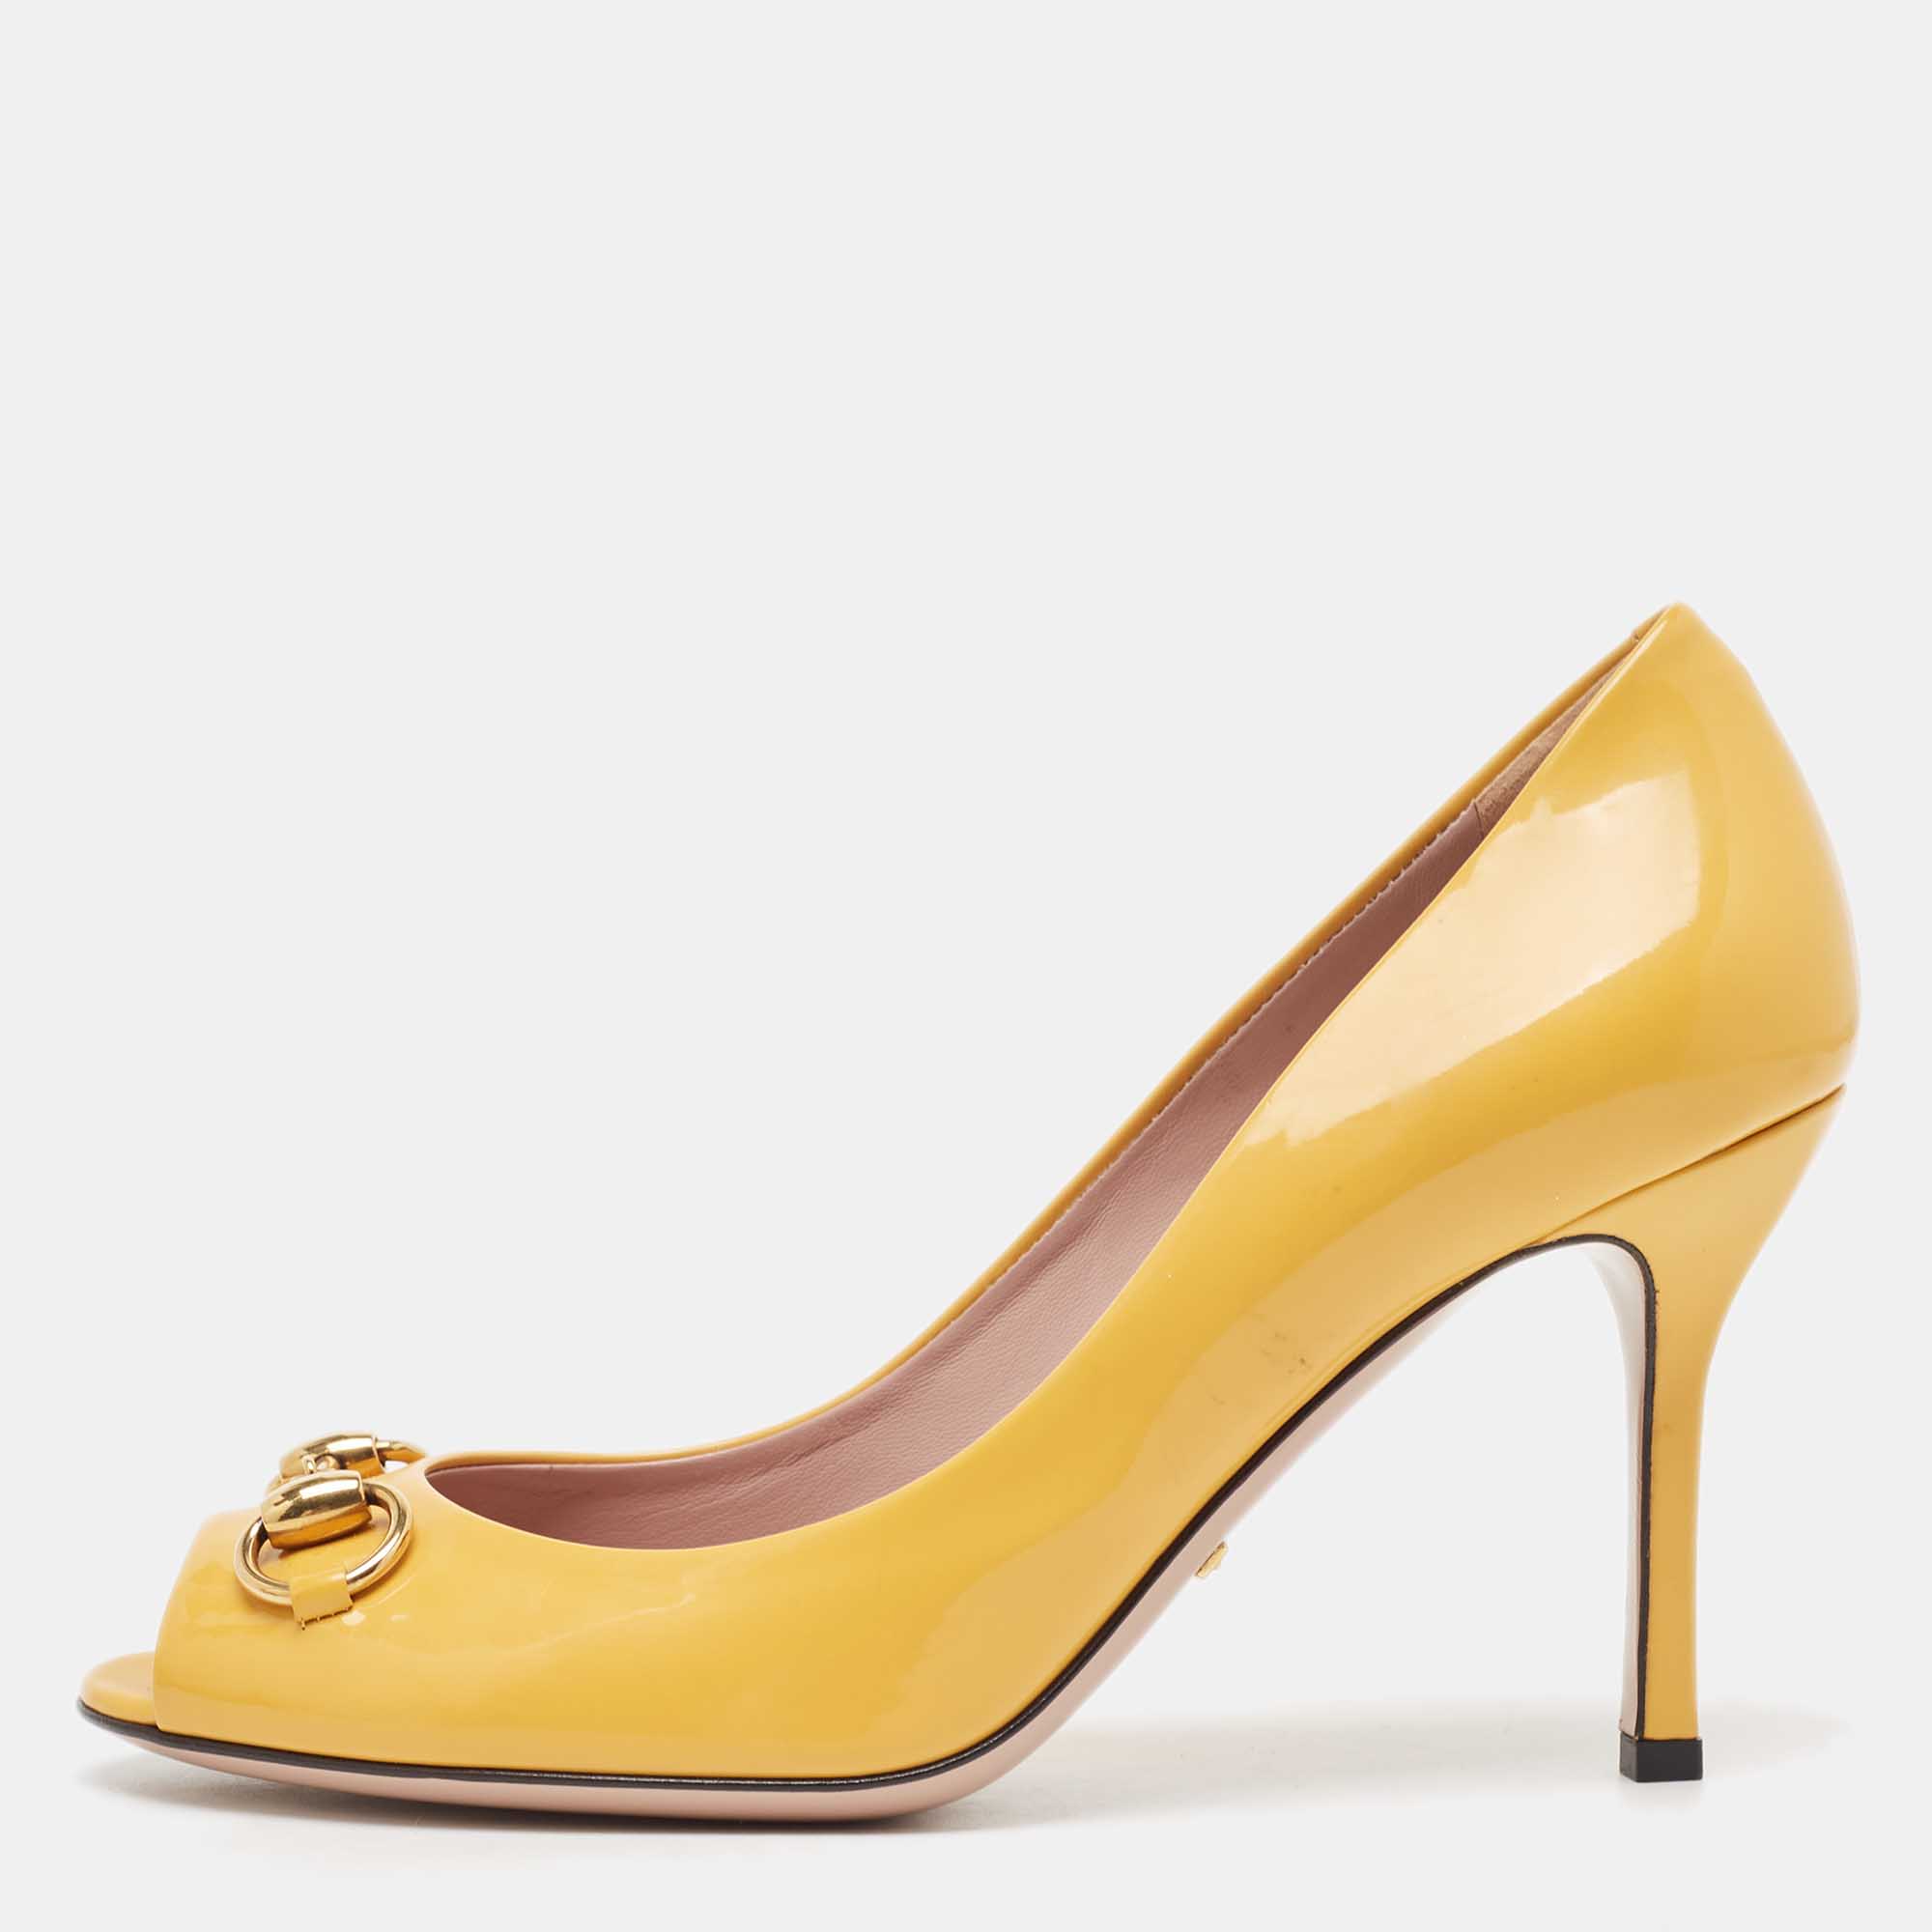 Gucci yellow patent leather horsebit peep toe pumps size 38